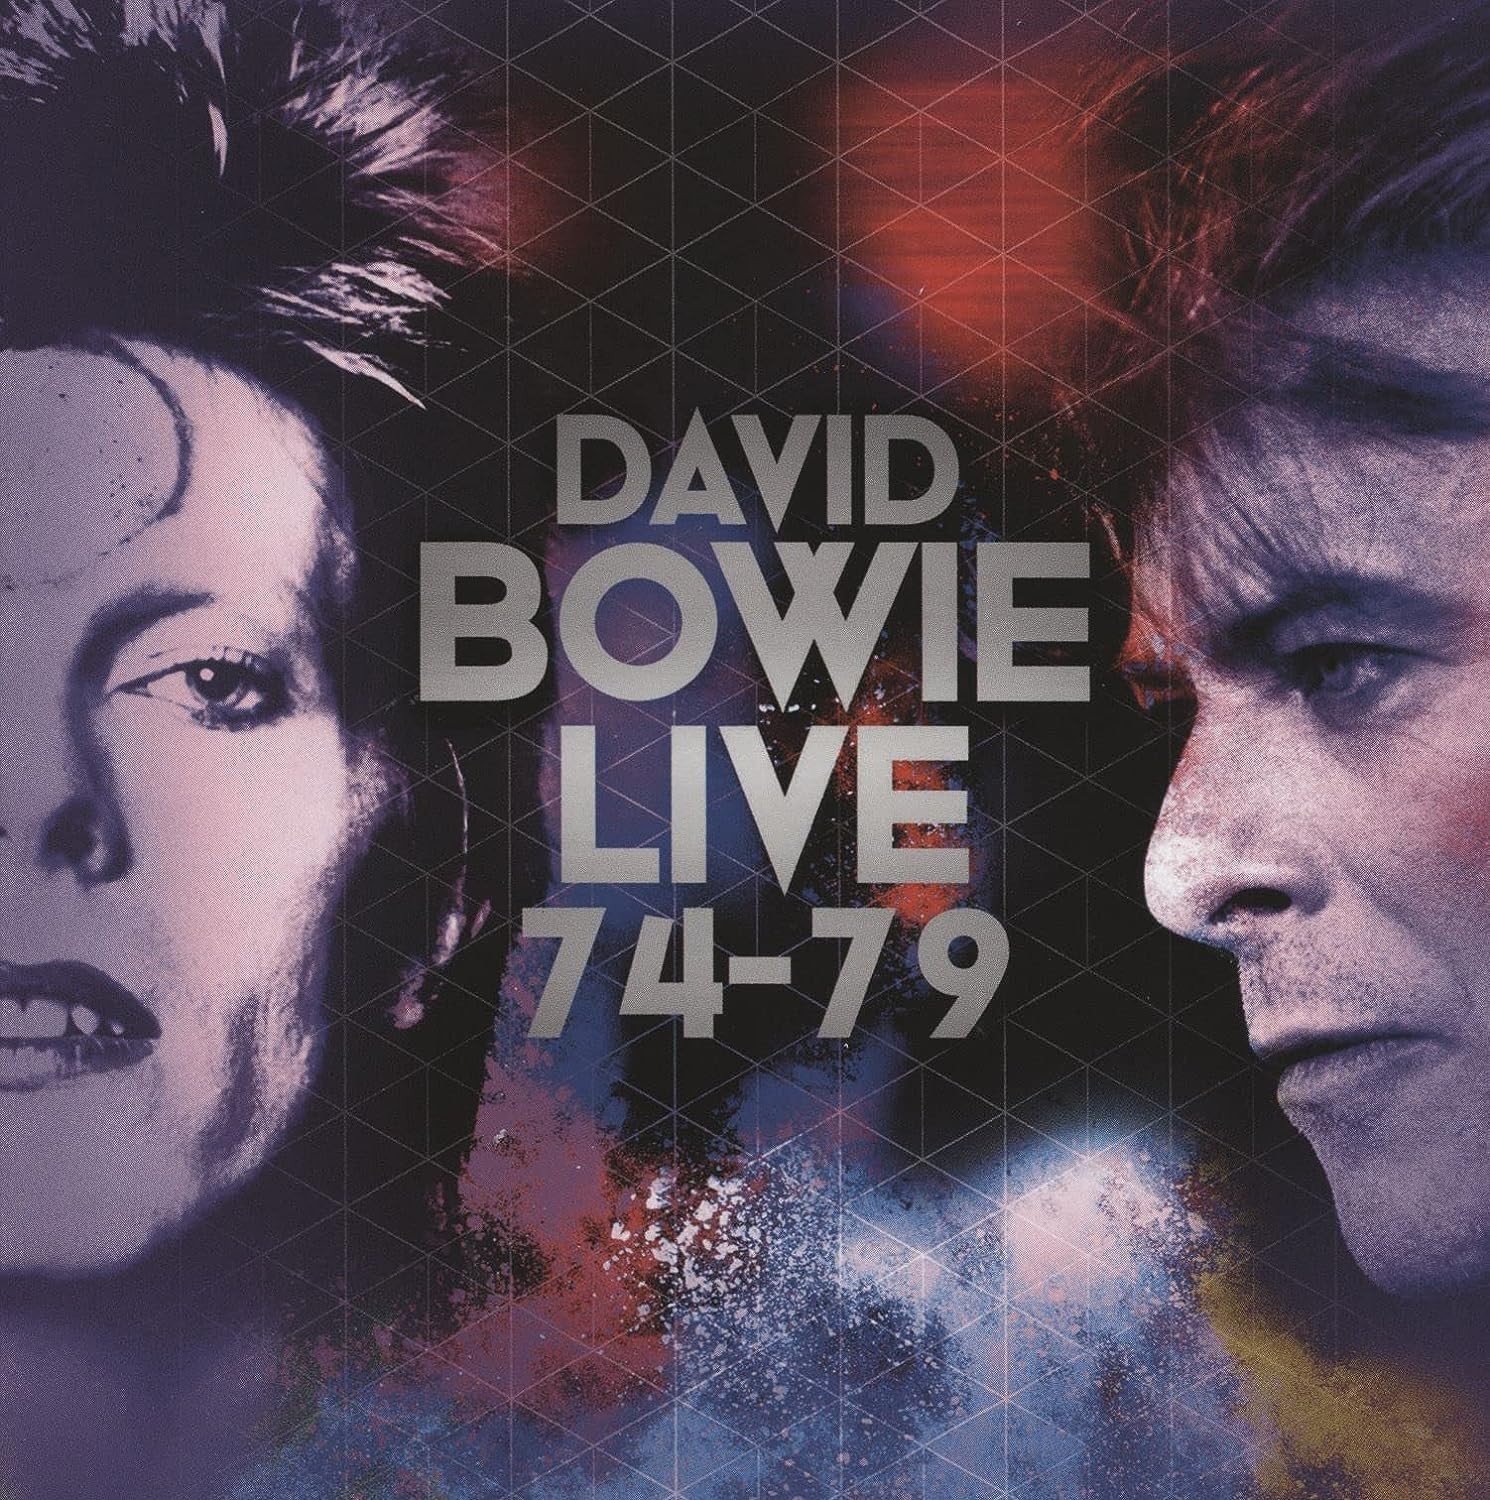 Bowie, David : Live 74-79 (4-CD)